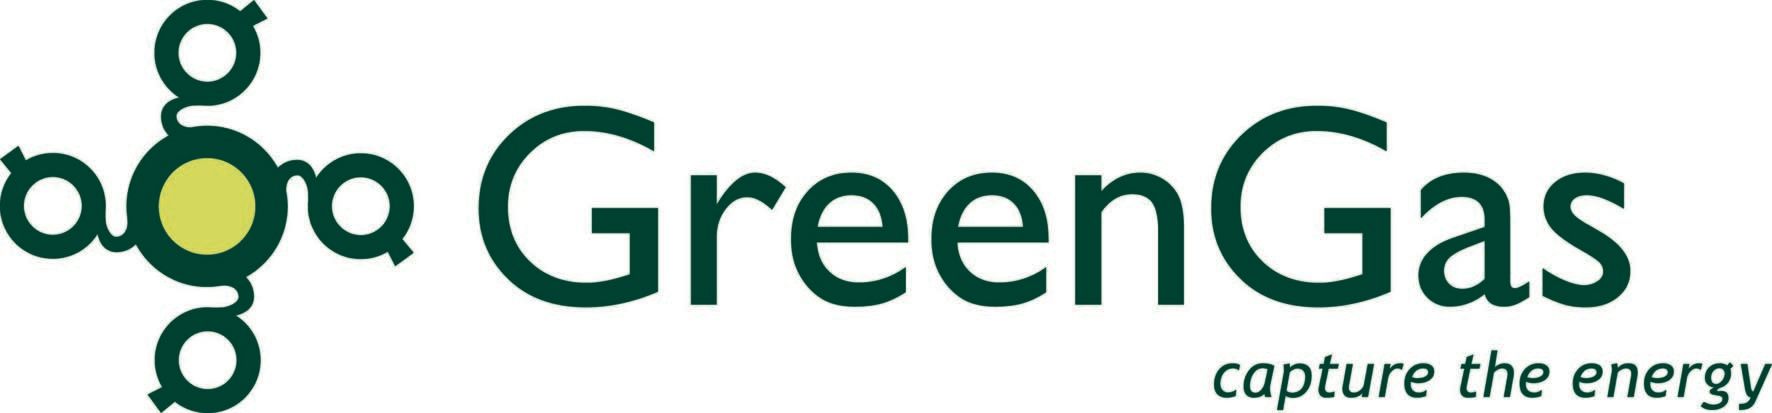 green gas